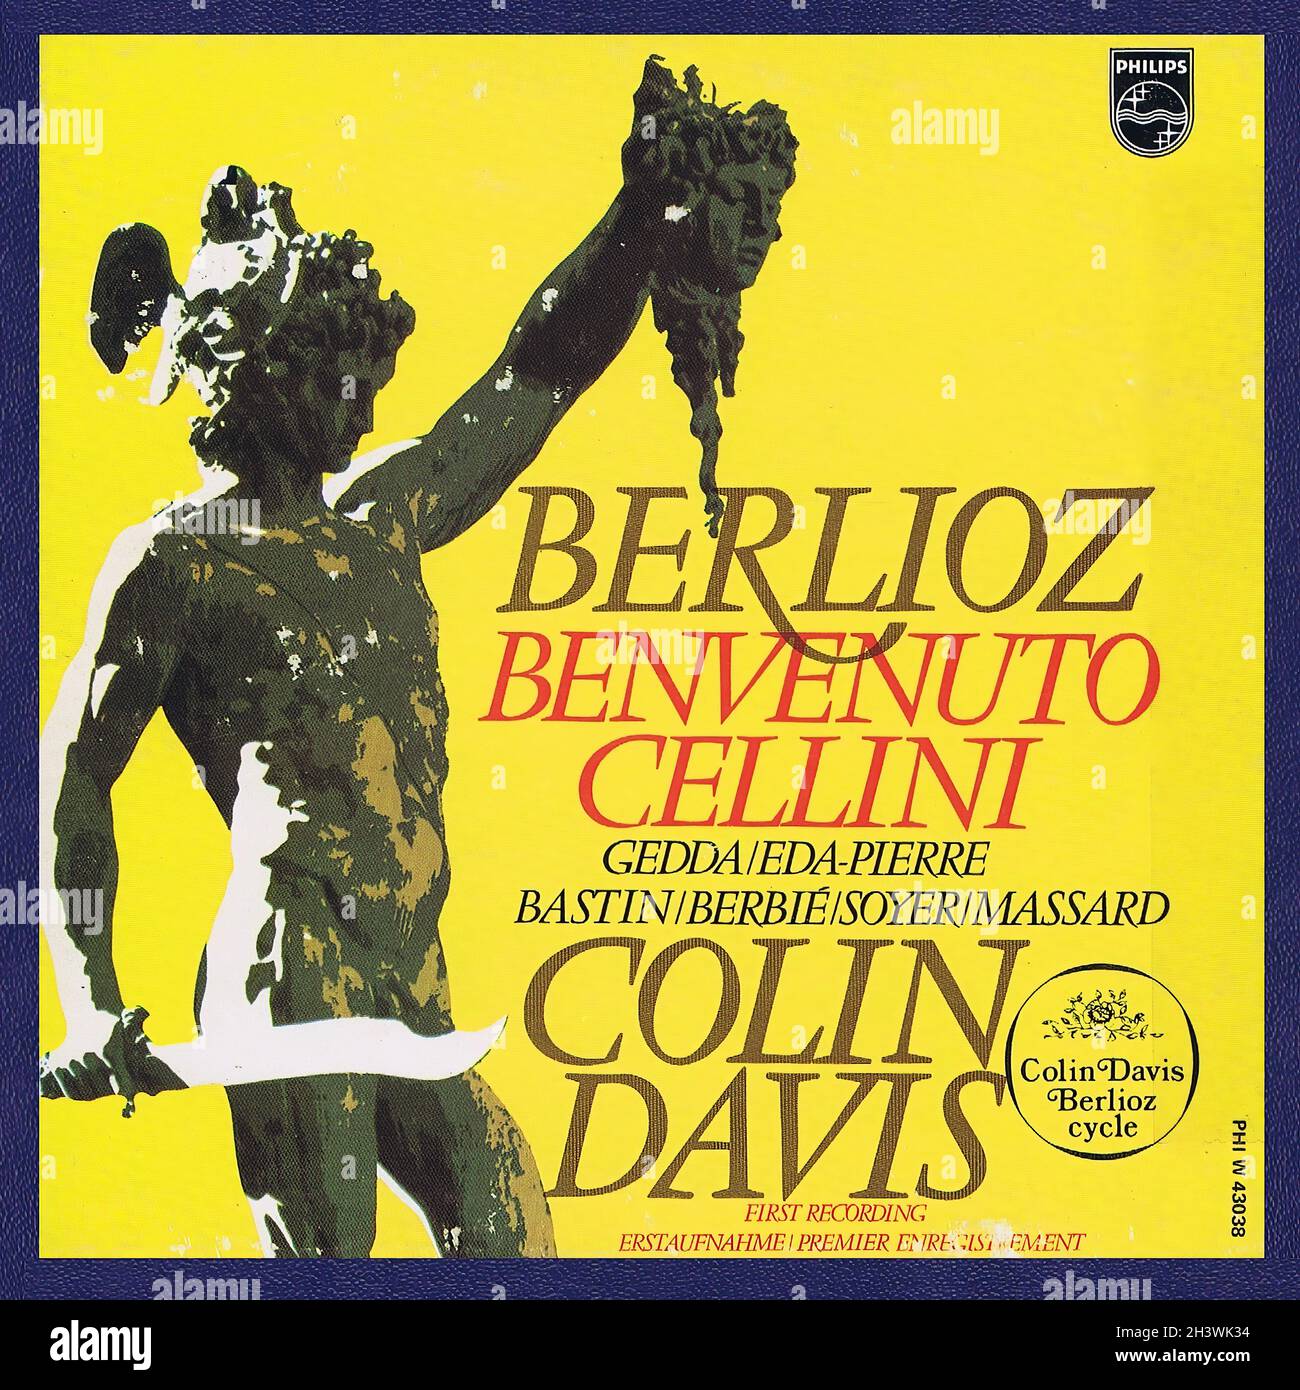 Berlioz Benvenuto cellini - Davis Gedda Philips R2R - Classical Music Vintage Vinyl Record Stock Photo